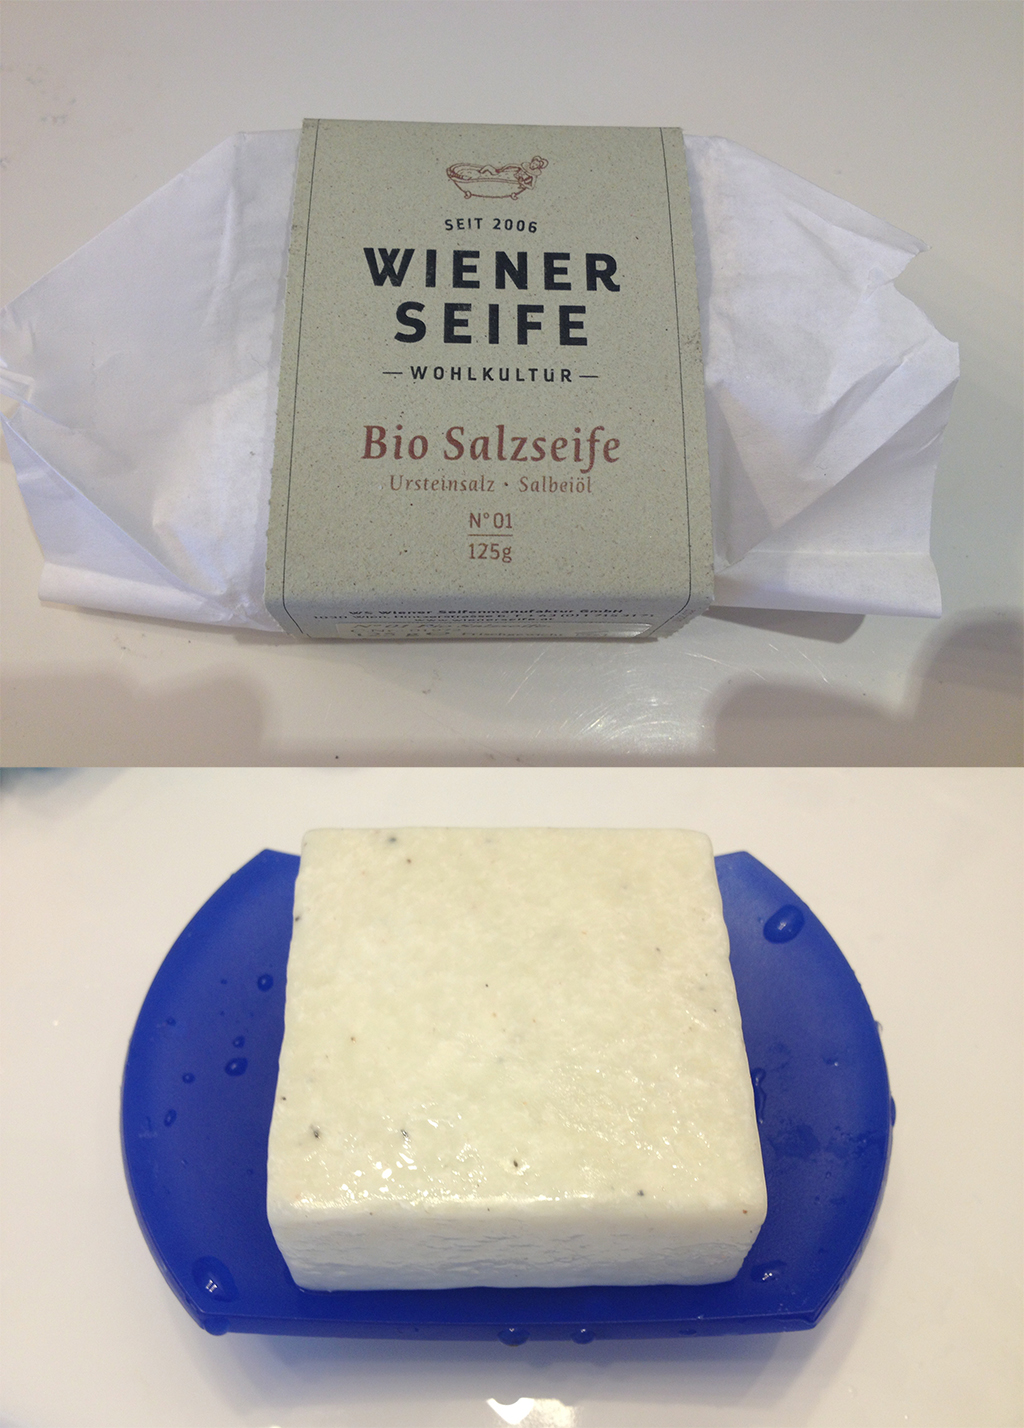 Wiener Seife: wunderbare Salbeiaromen!